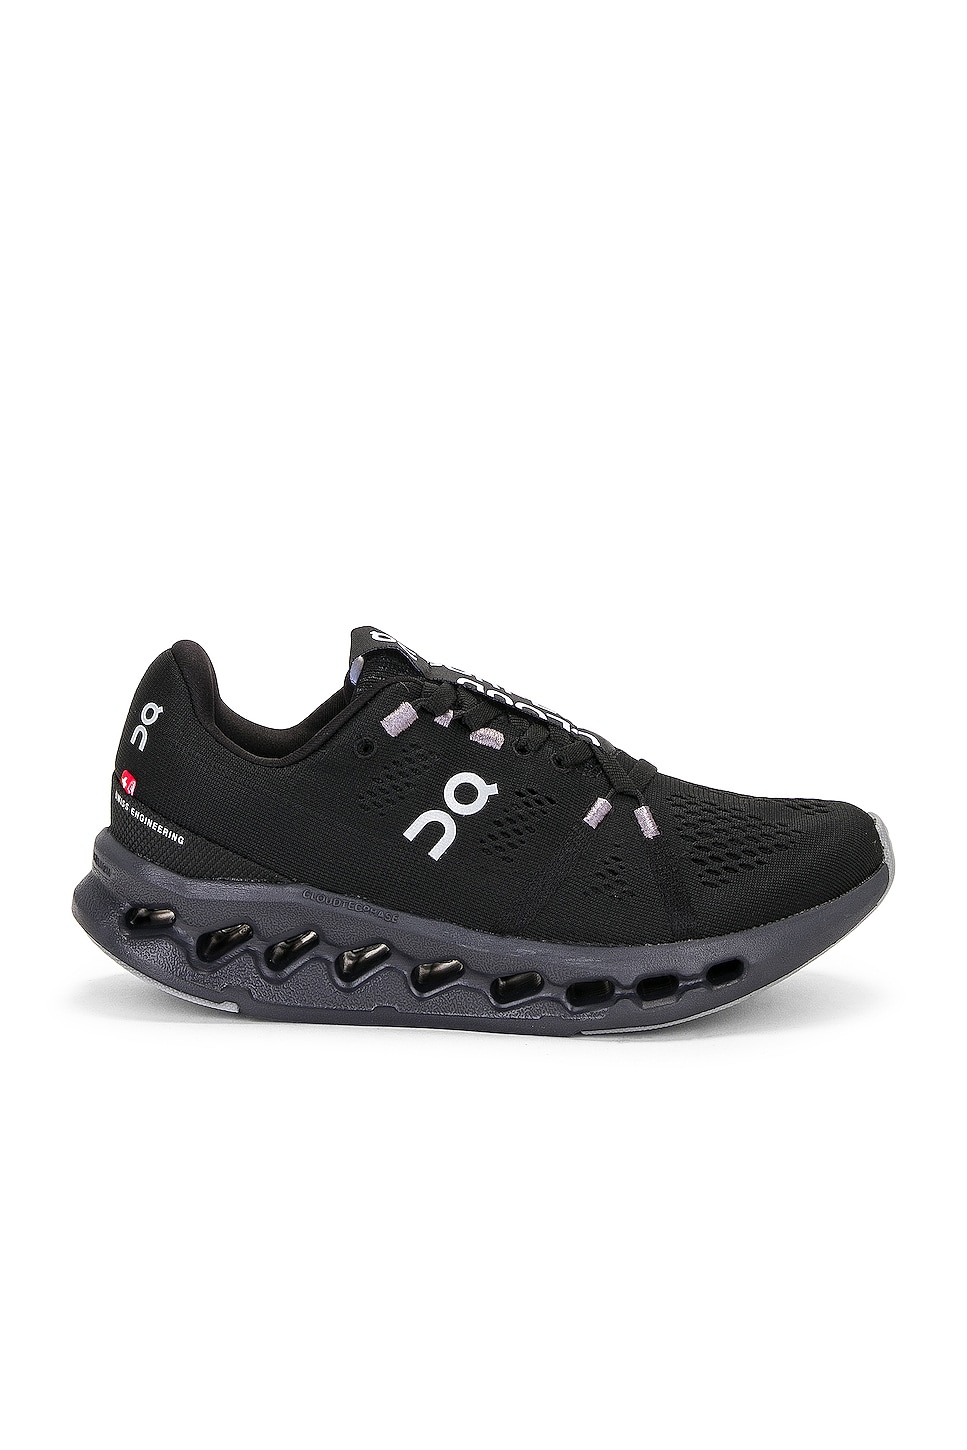 Image 1 of On Cloudsurfer Sneaker in All Black